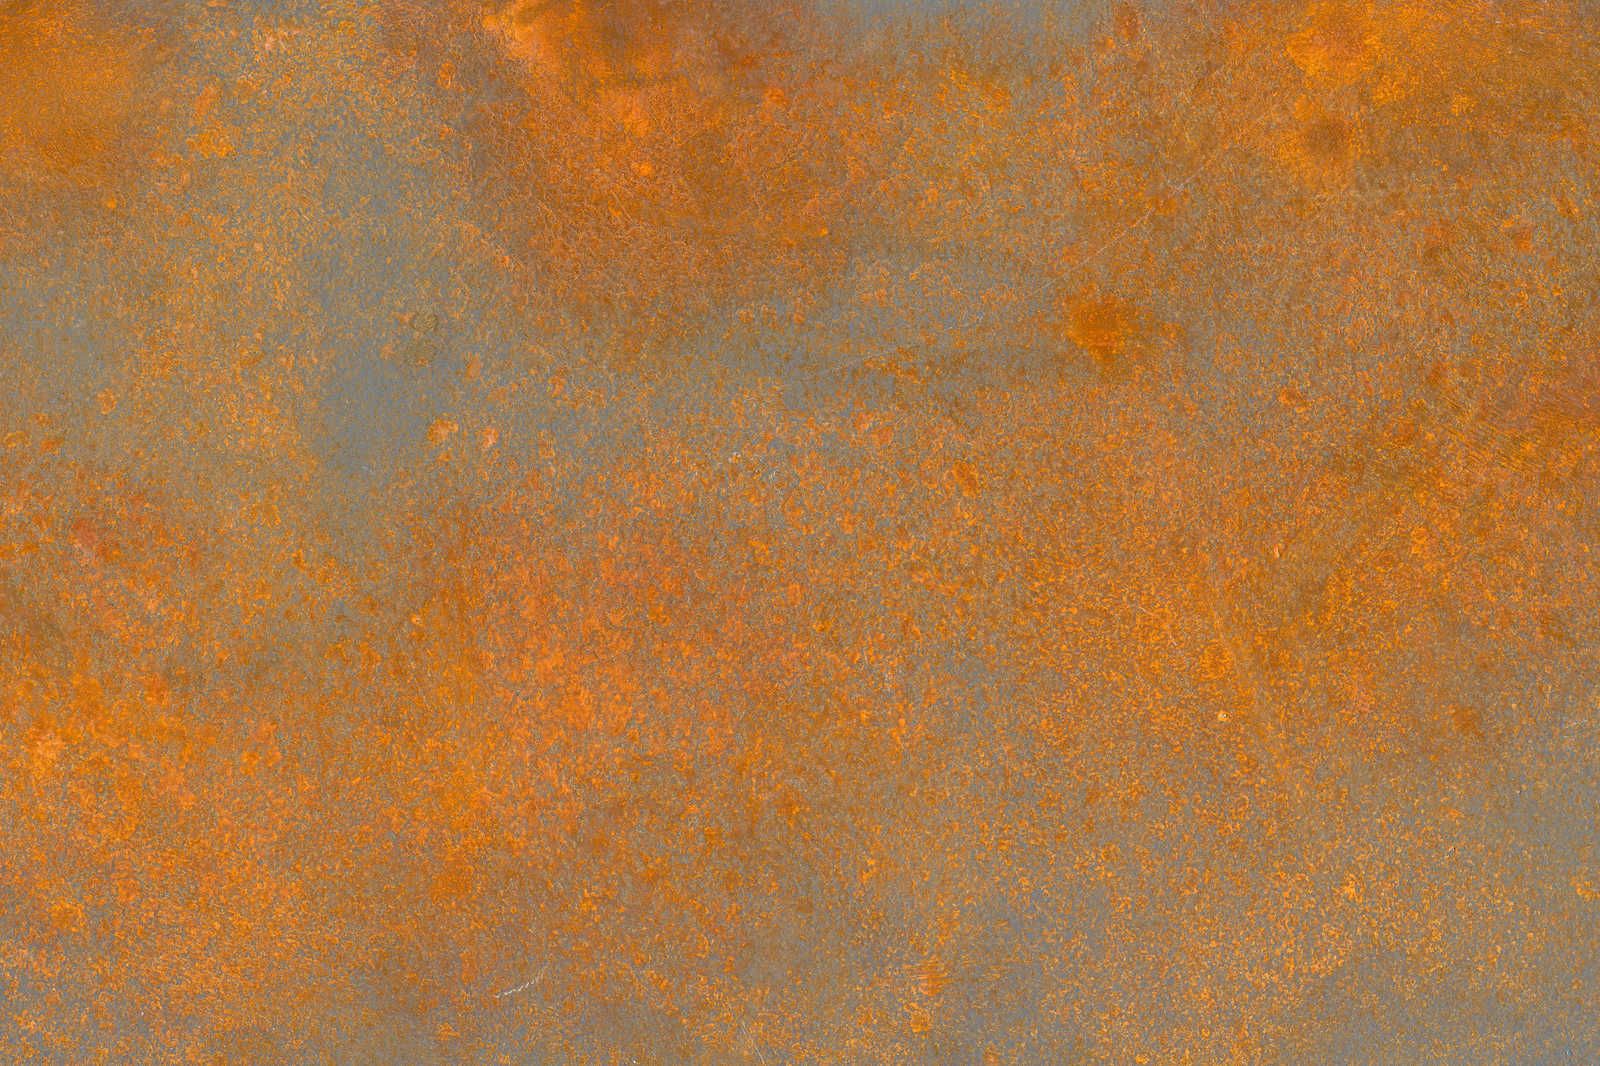             Lienzo Óptica Óxido Naranja Marrón con Aspecto Usado - 0,90 m x 0,60 m
        